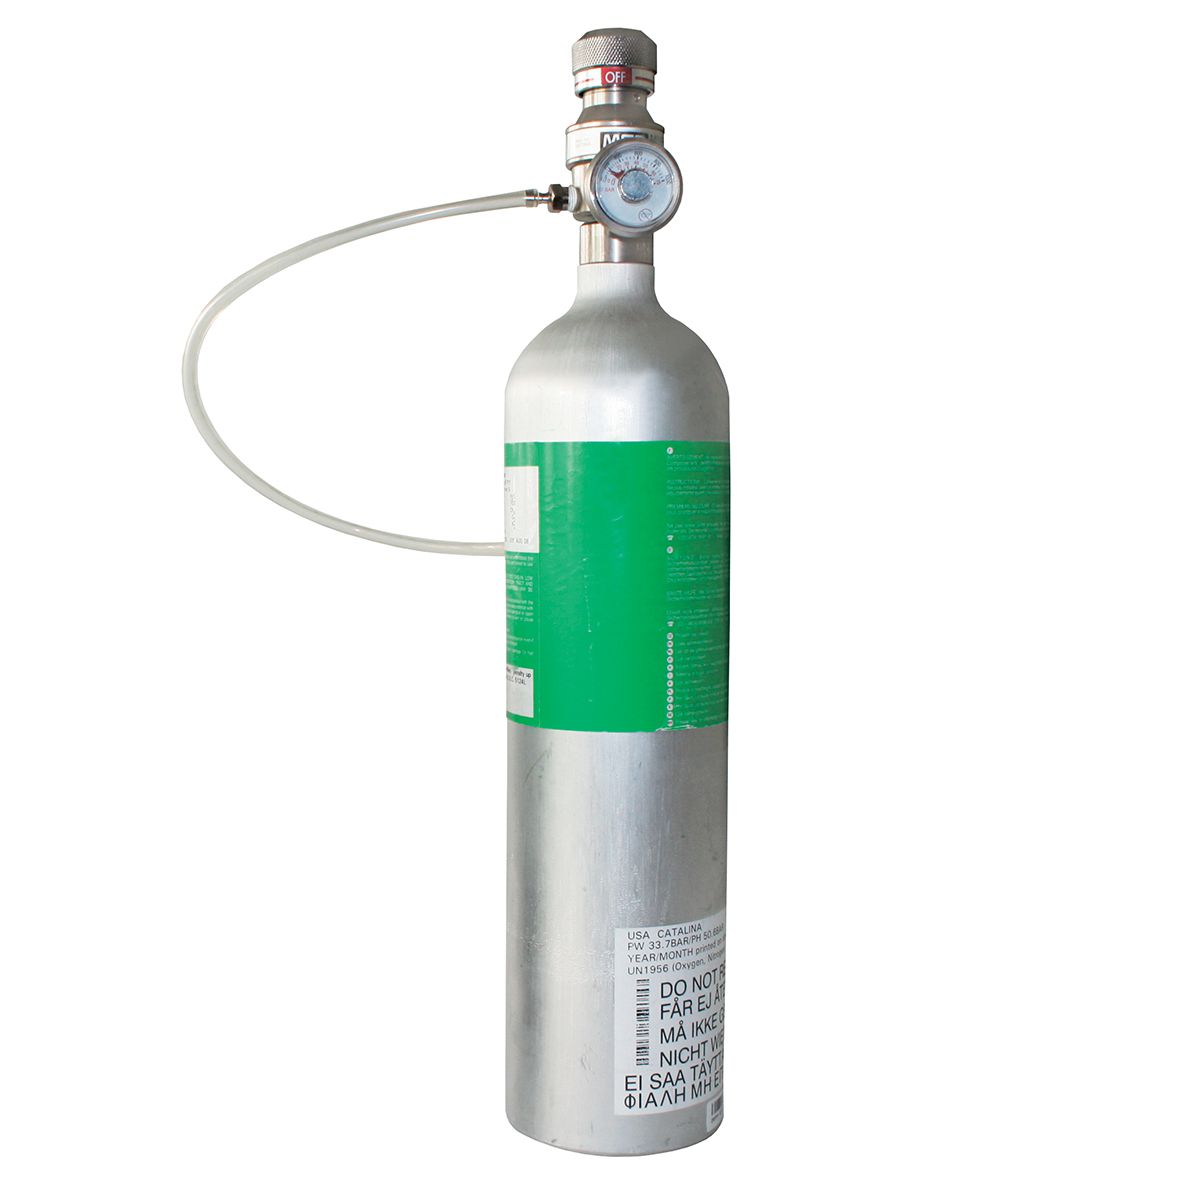 MSA Mischgasflasche 58 L - 1,45 Vol% CH4, 60 ppm CO, 20 ppm H2S, 15 Vol% O2